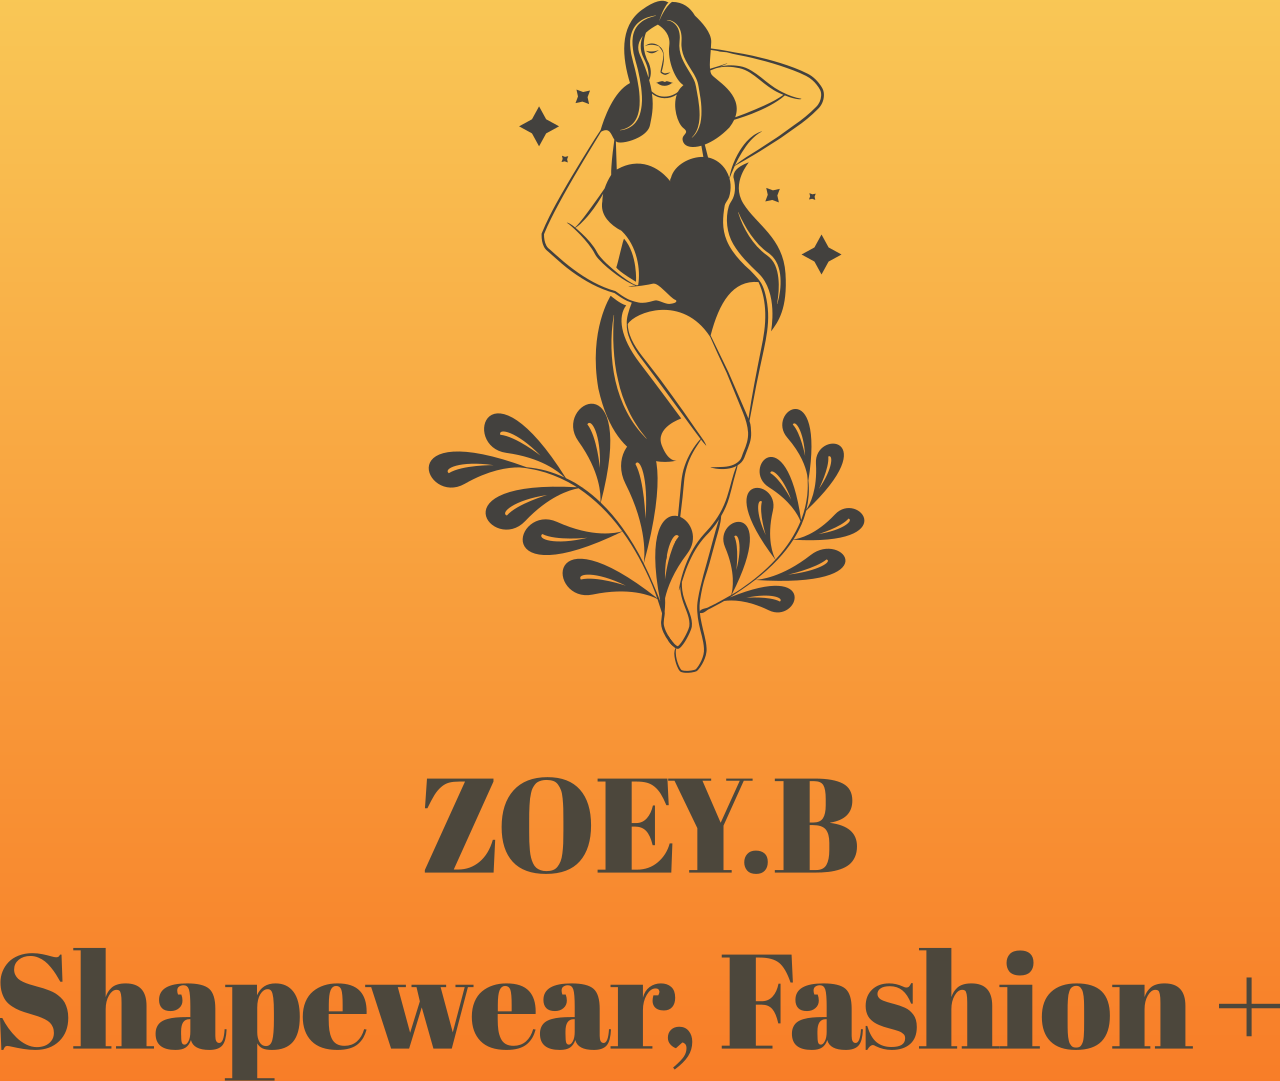 ZOEY. B

SHAPEWEAR, FASHION+'s logo